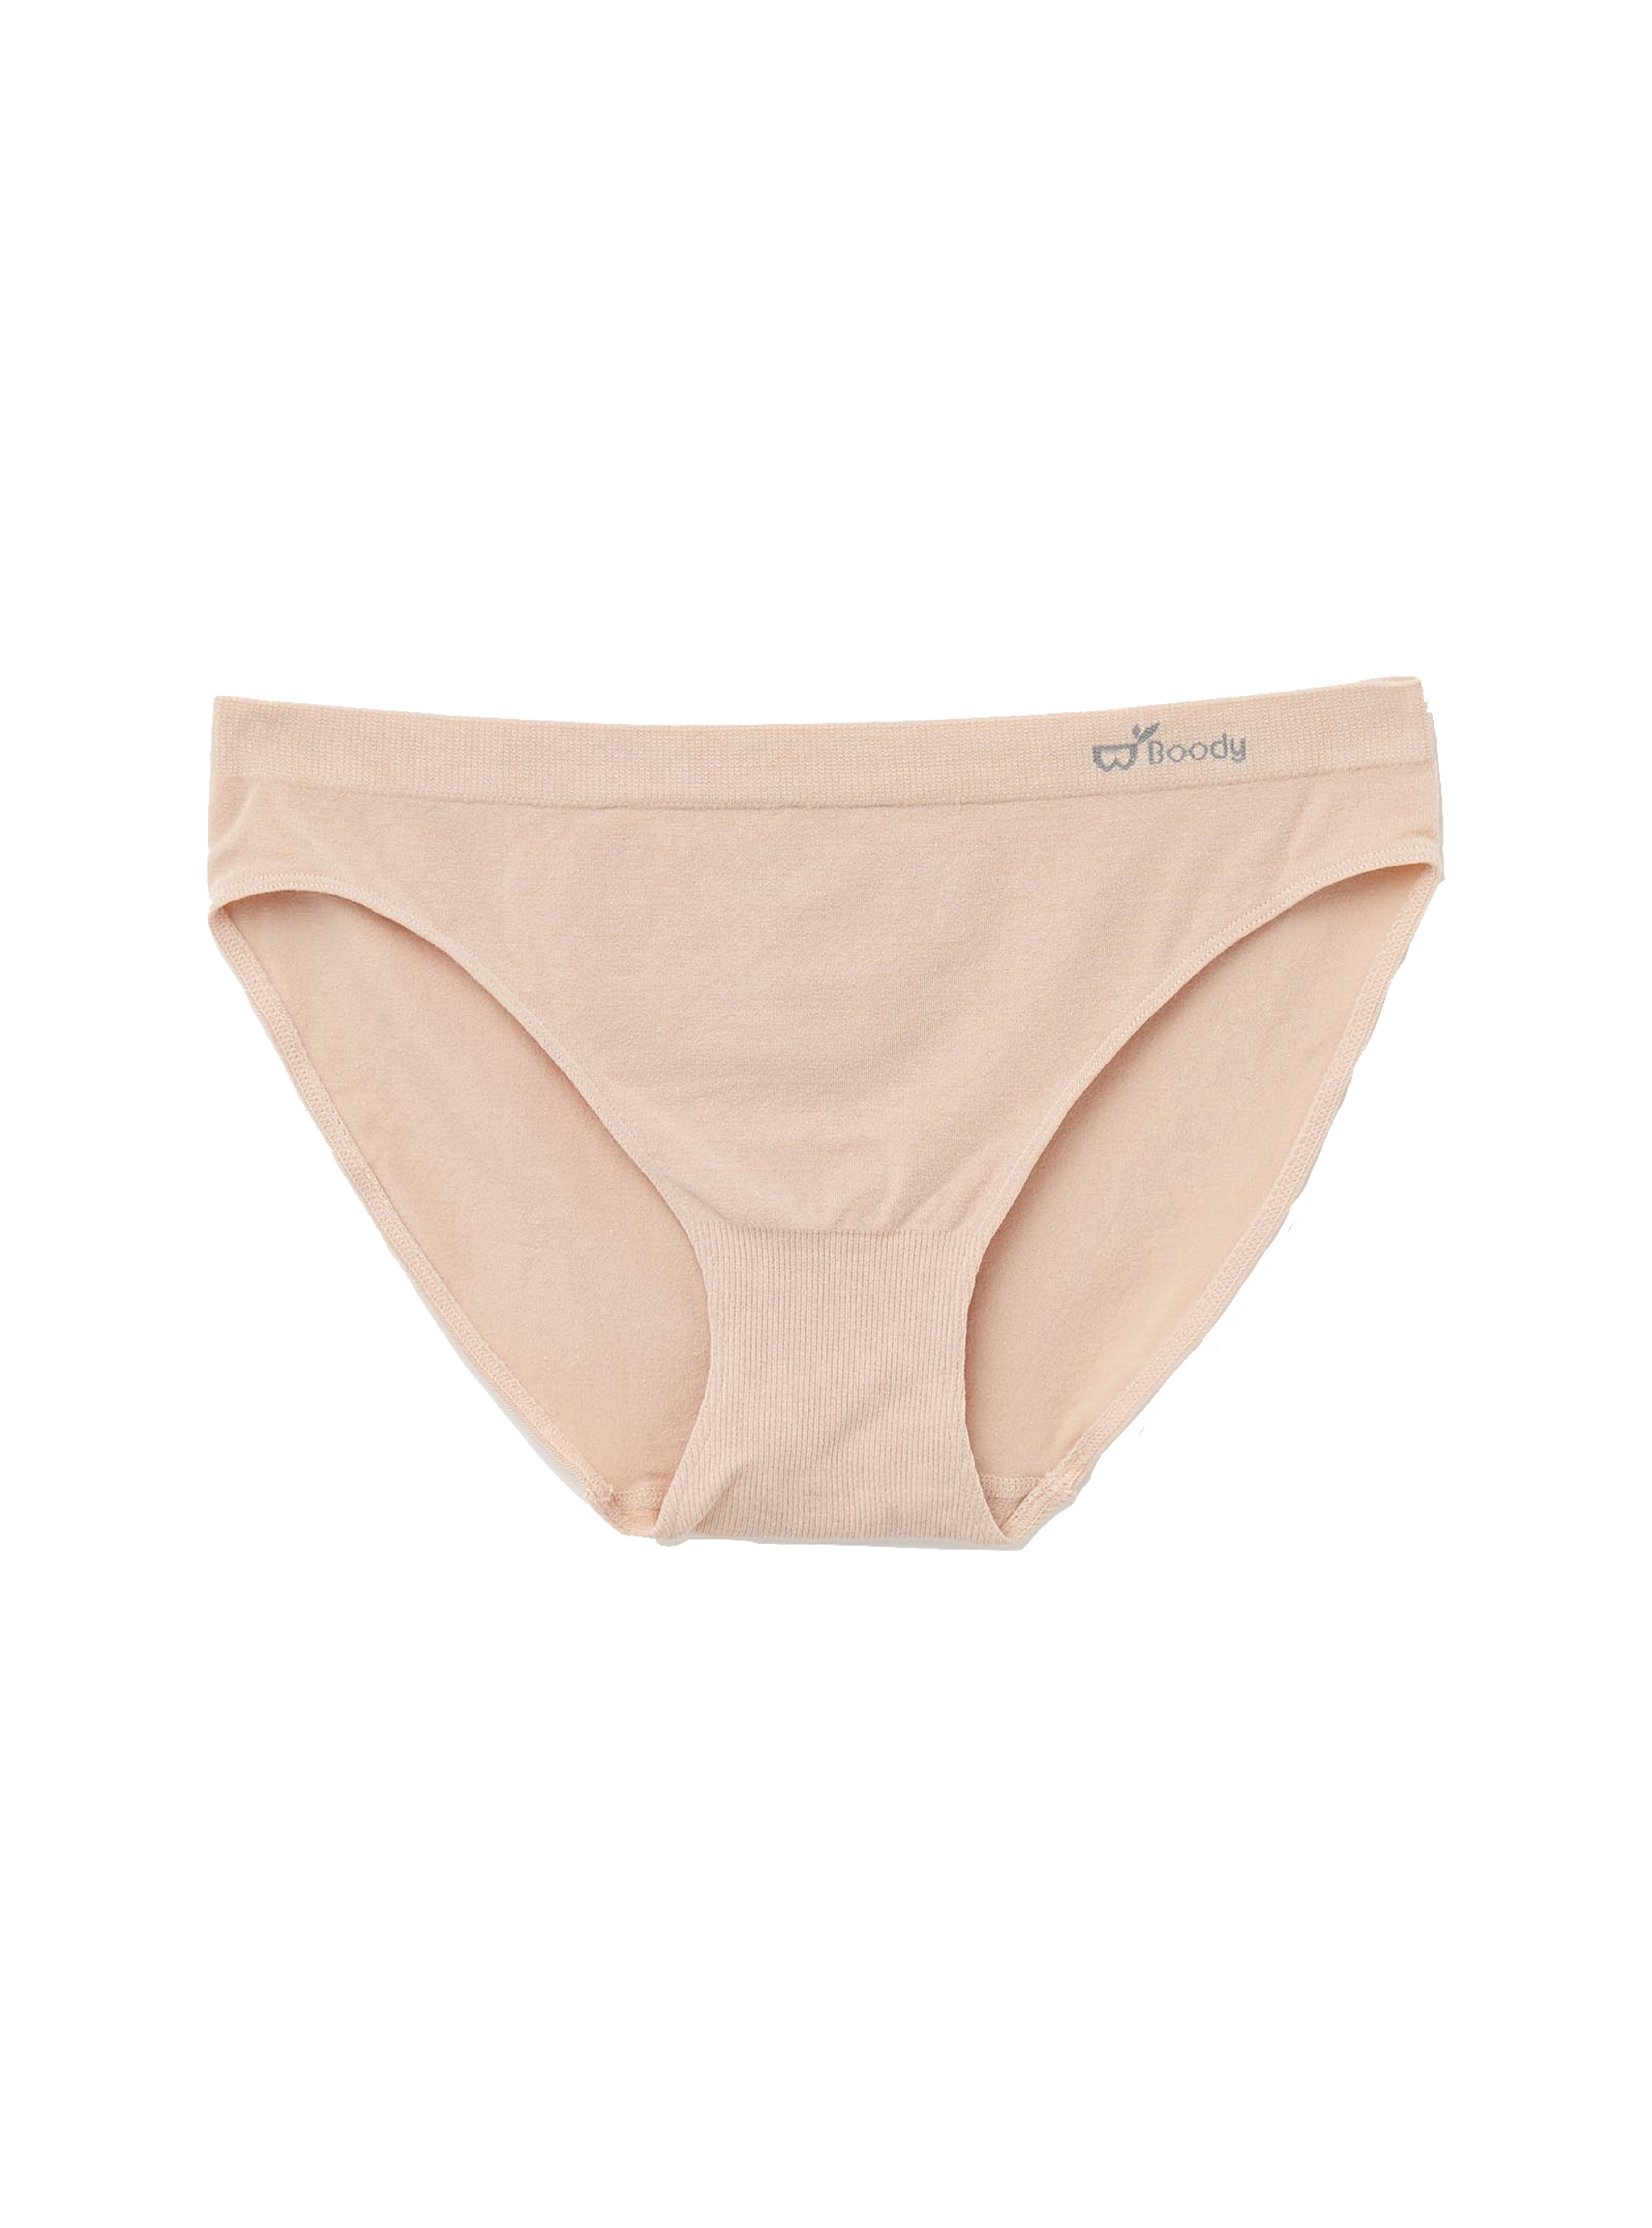 BOODY - Bamboo Underwear - Bikini Classic - Navy